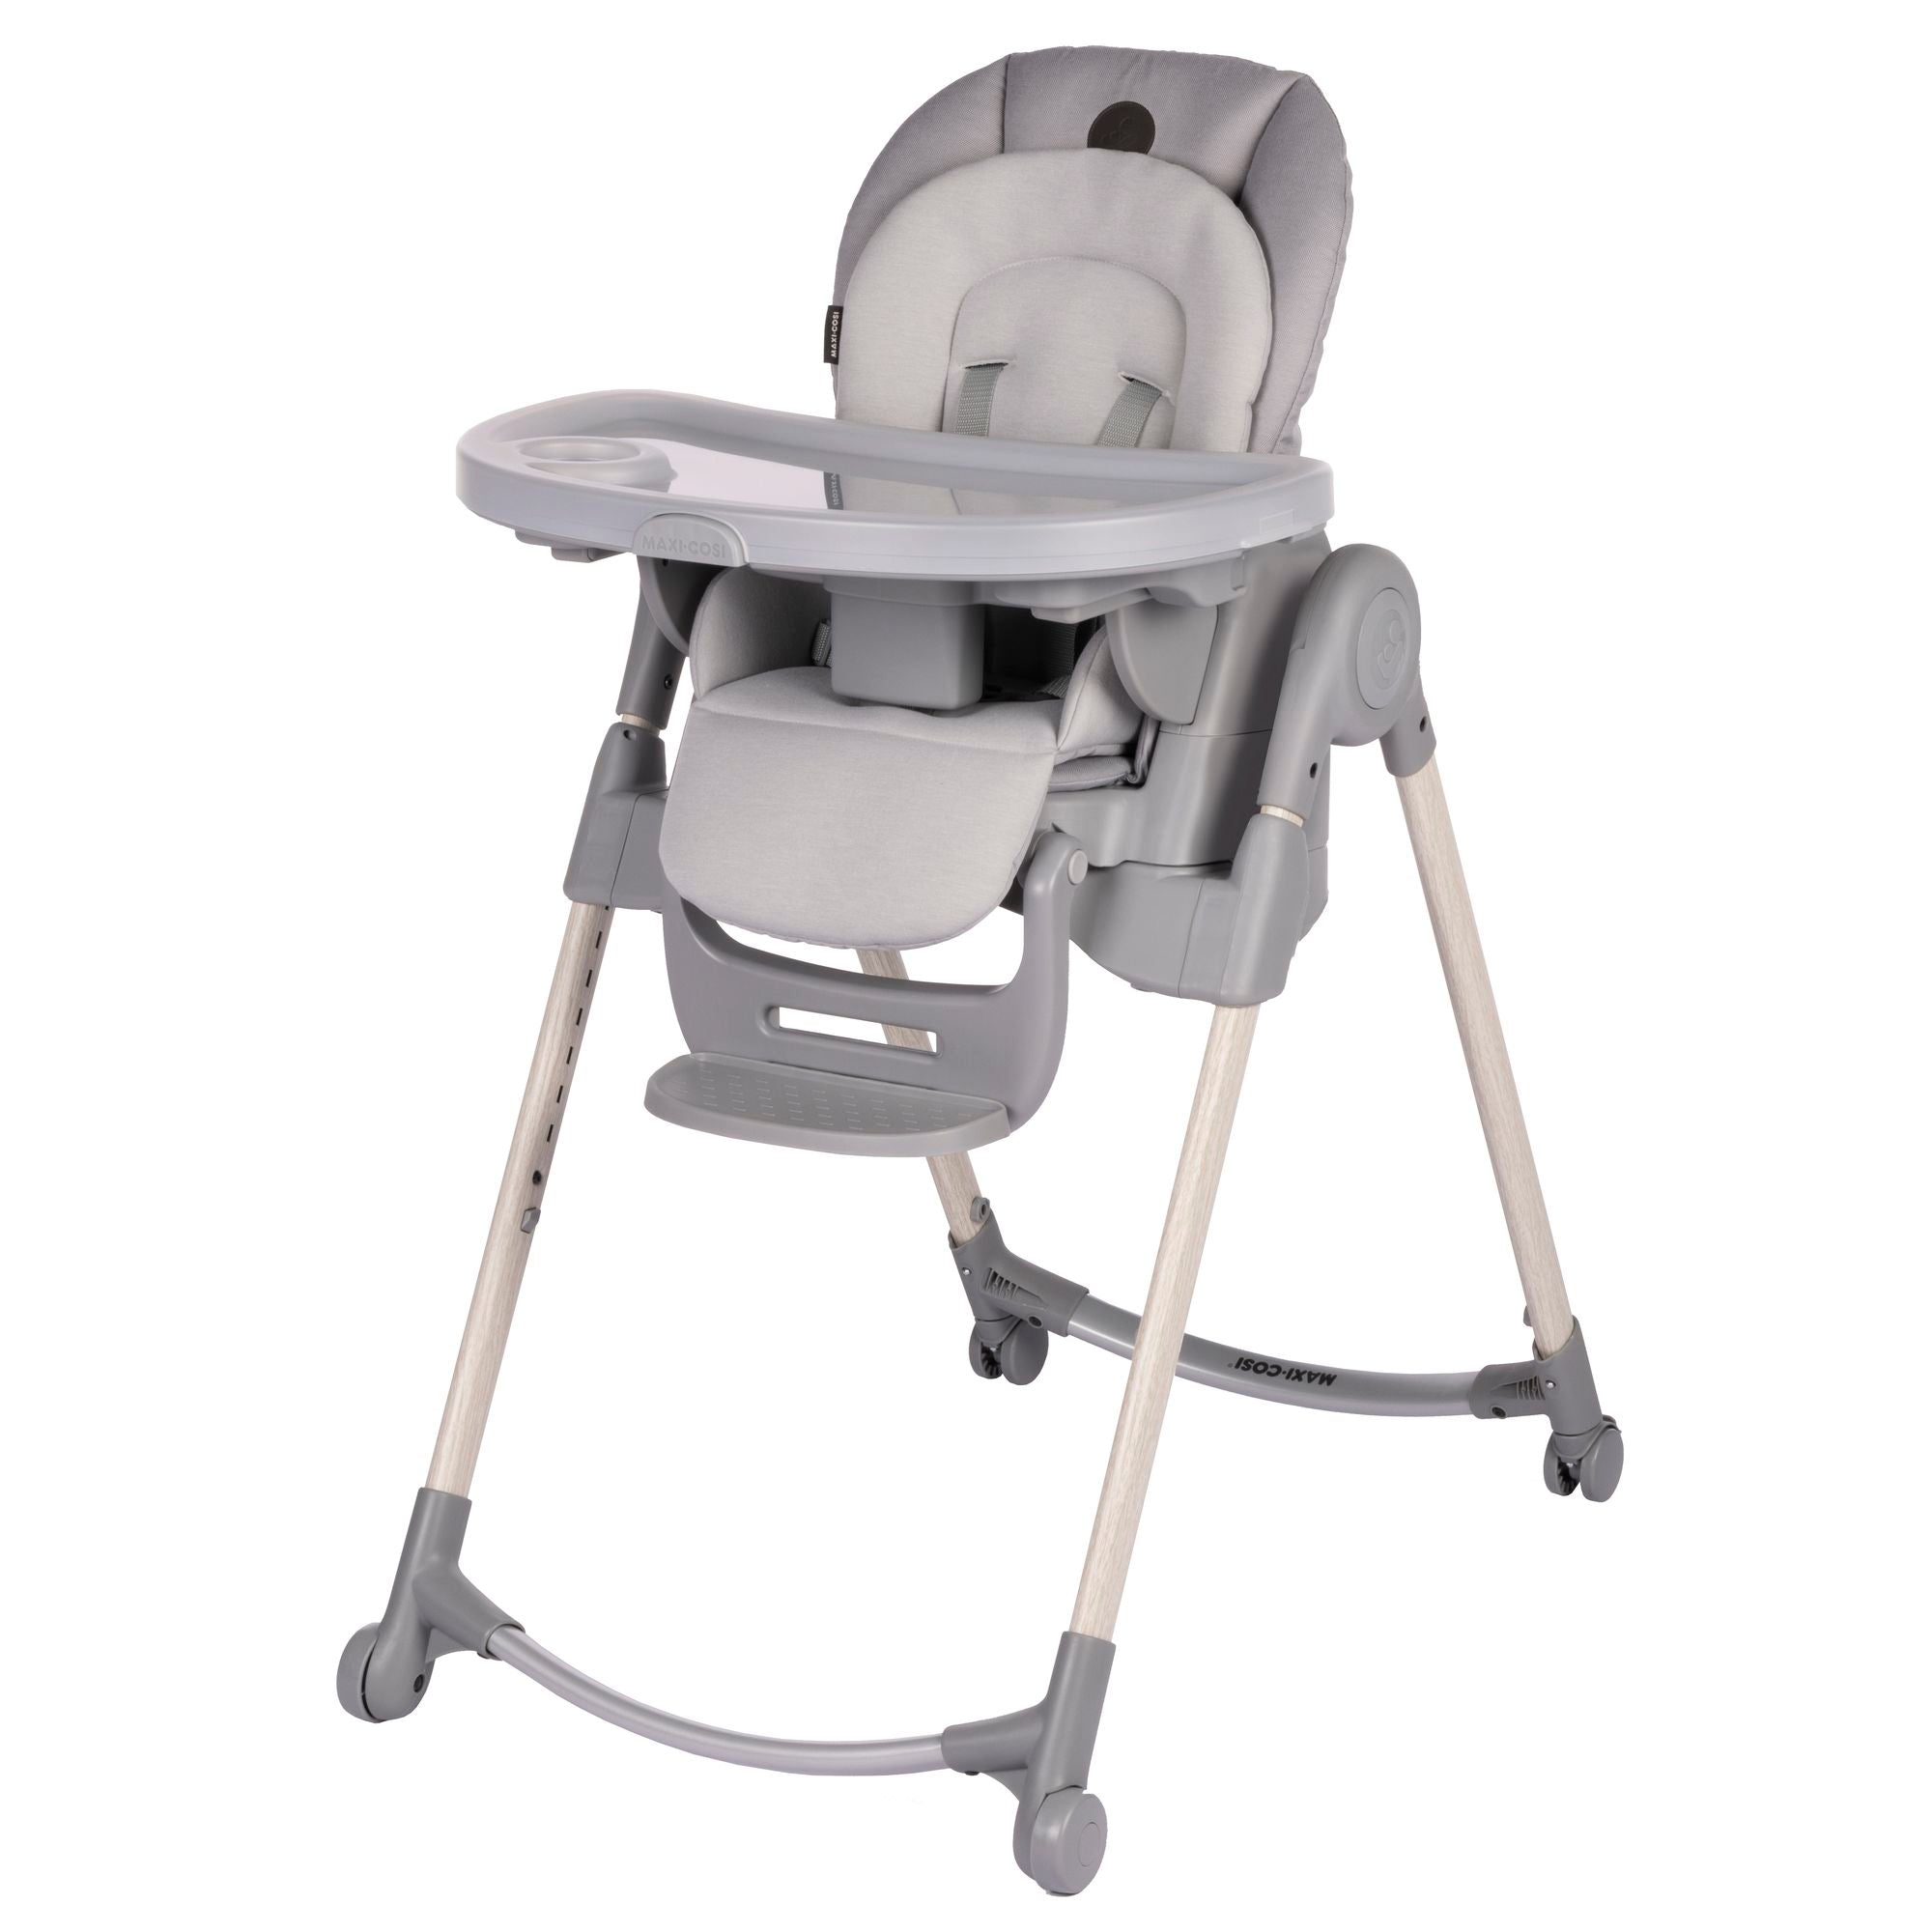 Minla 6 in 1 High Chair - Gray